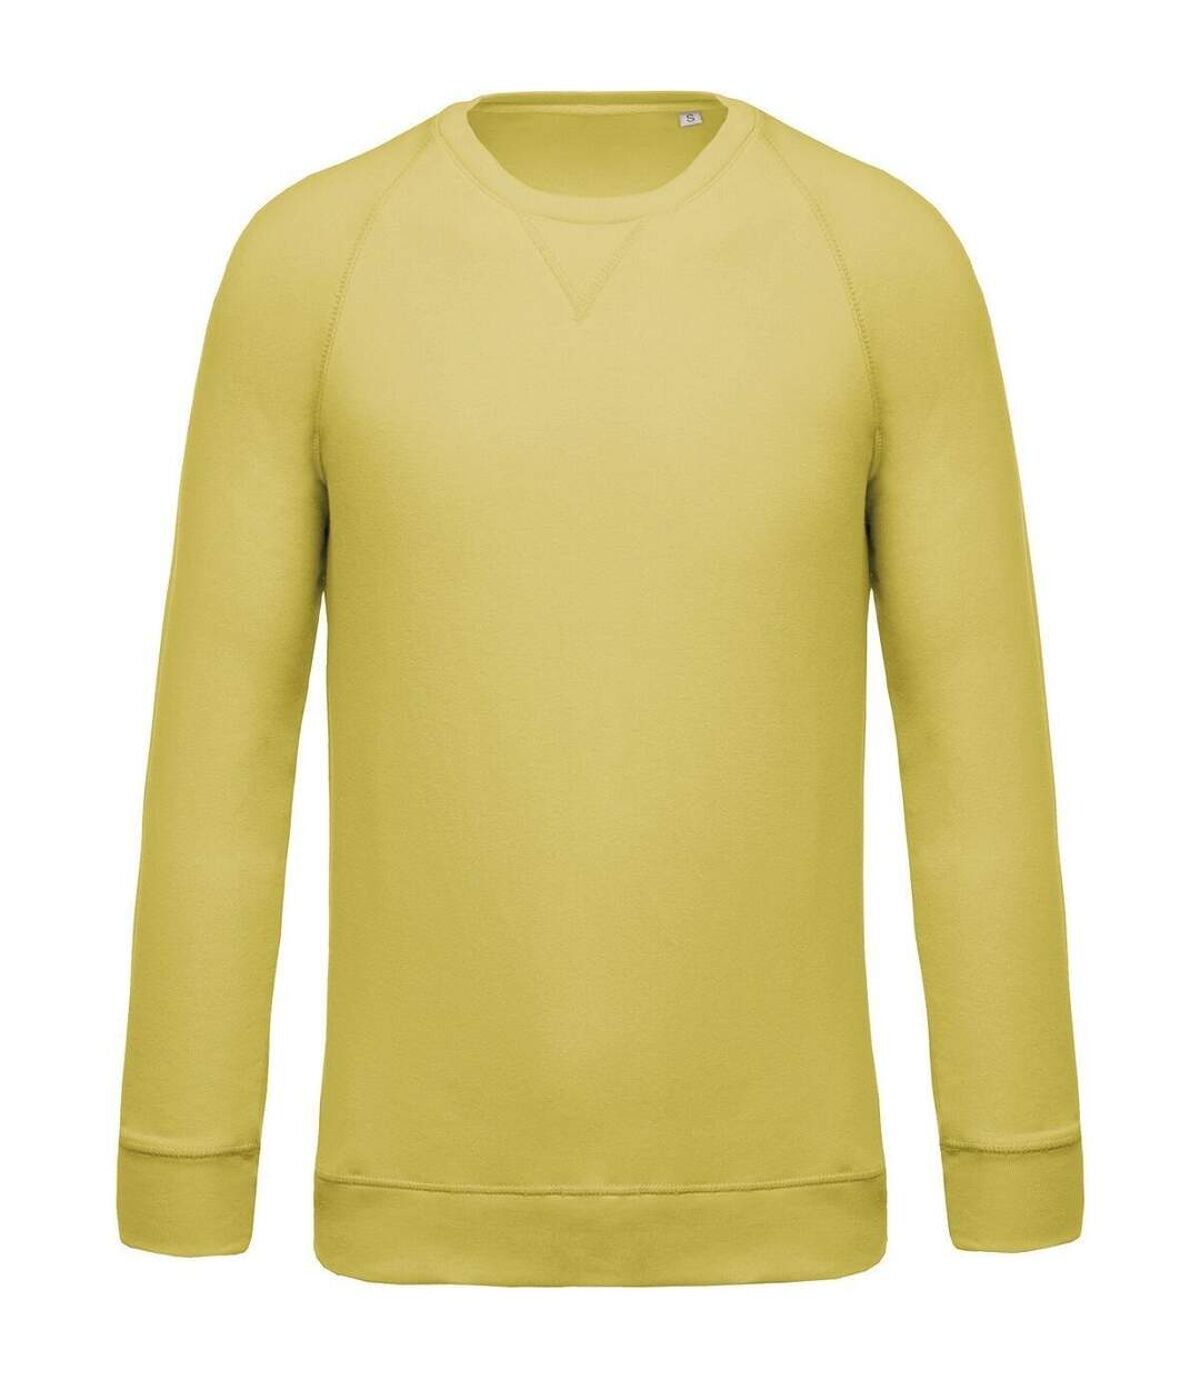 Sweat shirt coton bio - Homme - K480 - jaune